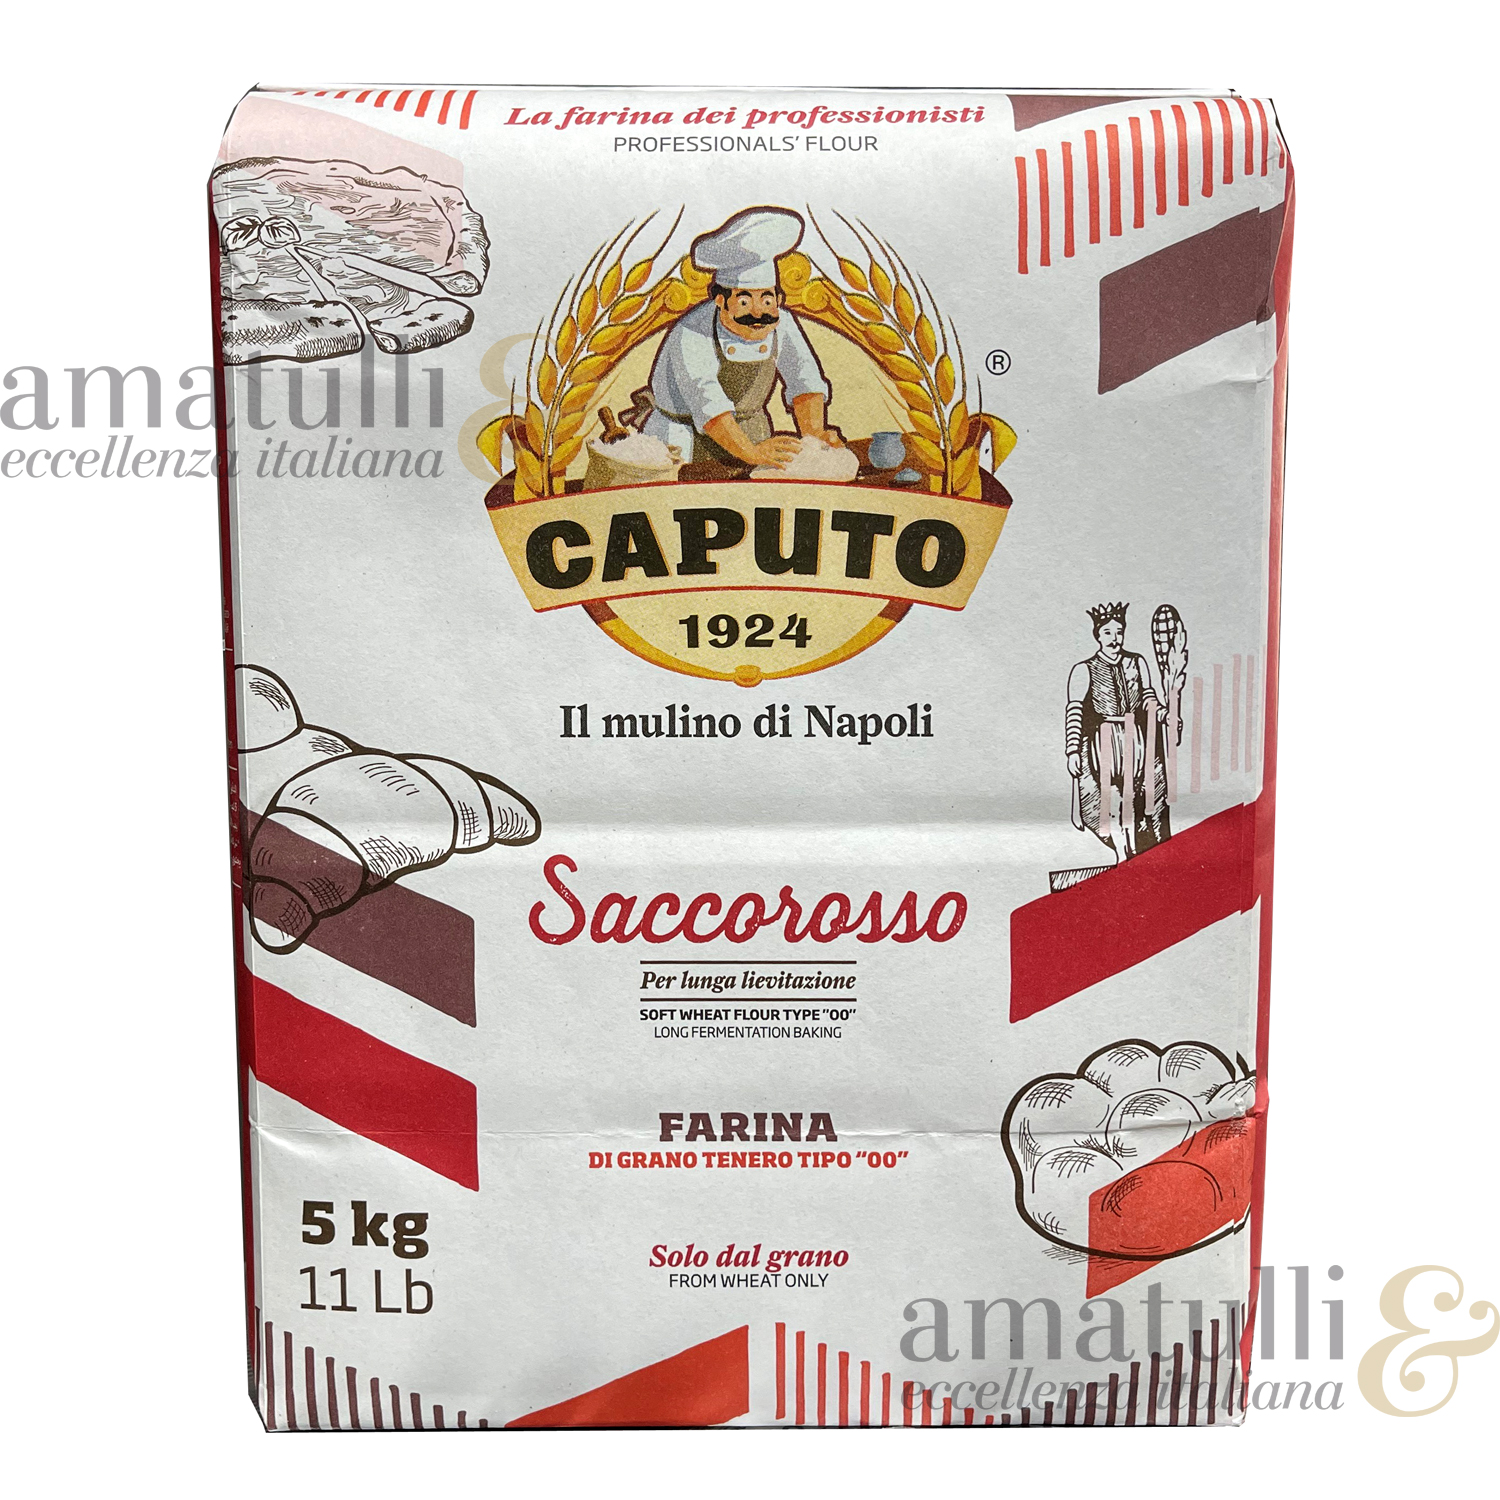 Caputo Cuoco/Saccorosso - Pizzafredag